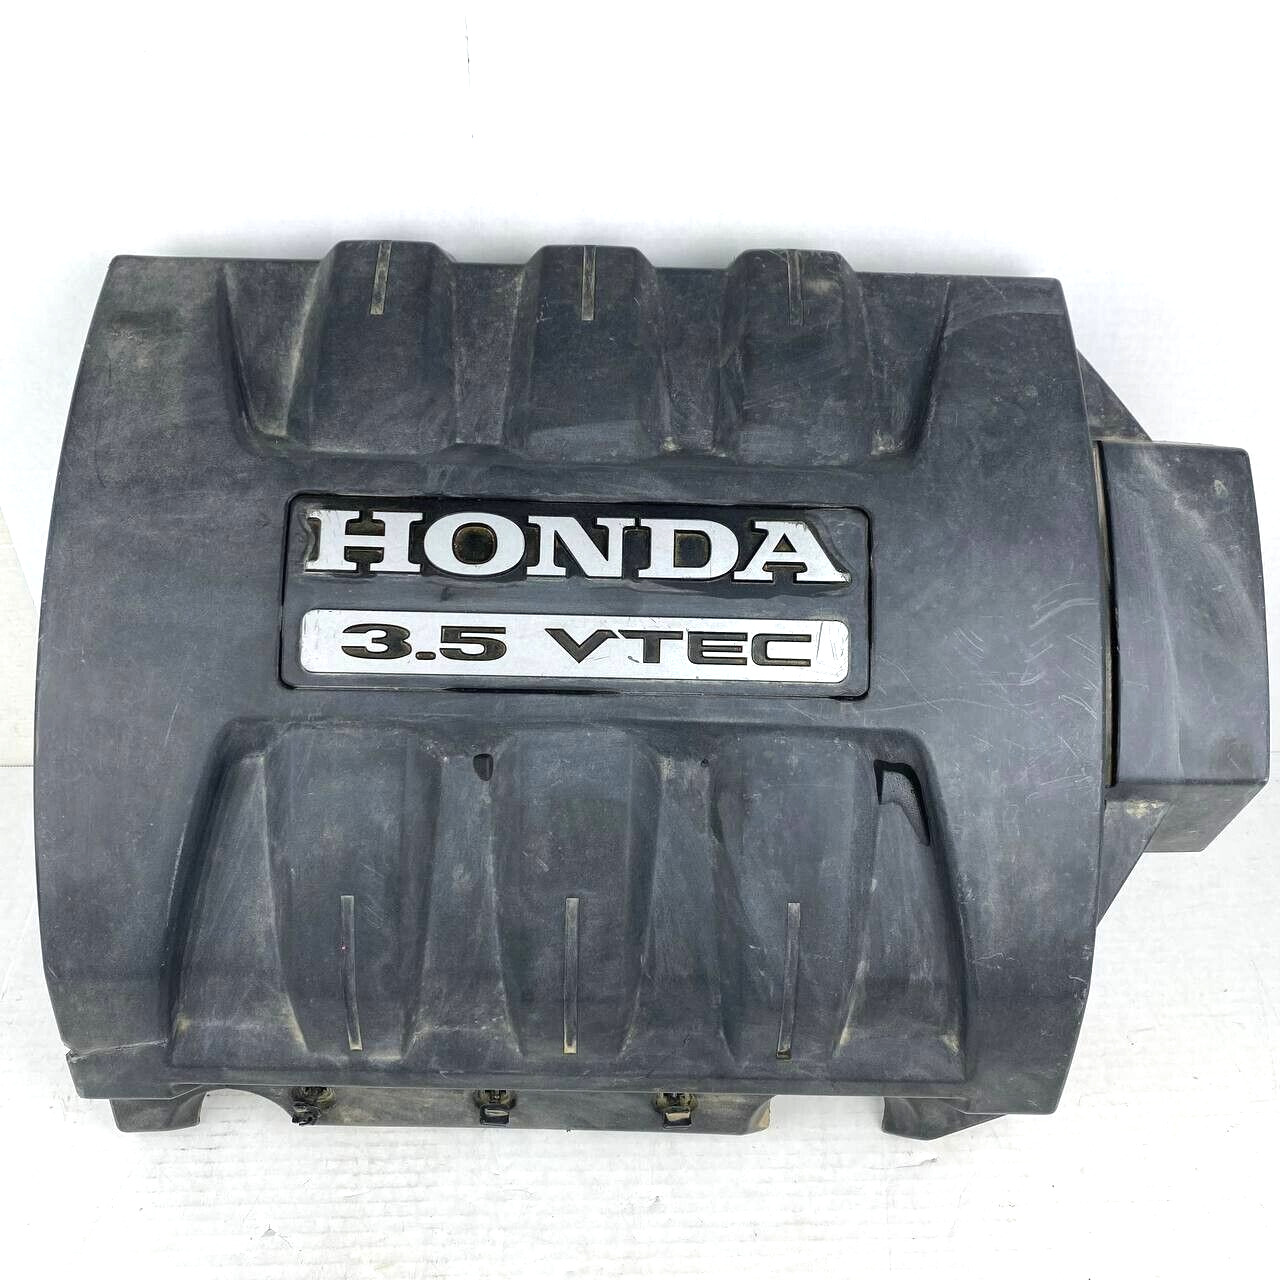 2005 - 2008 Honda Pilot 3.5L VTEC Engine Appearance Cover Shield OEM